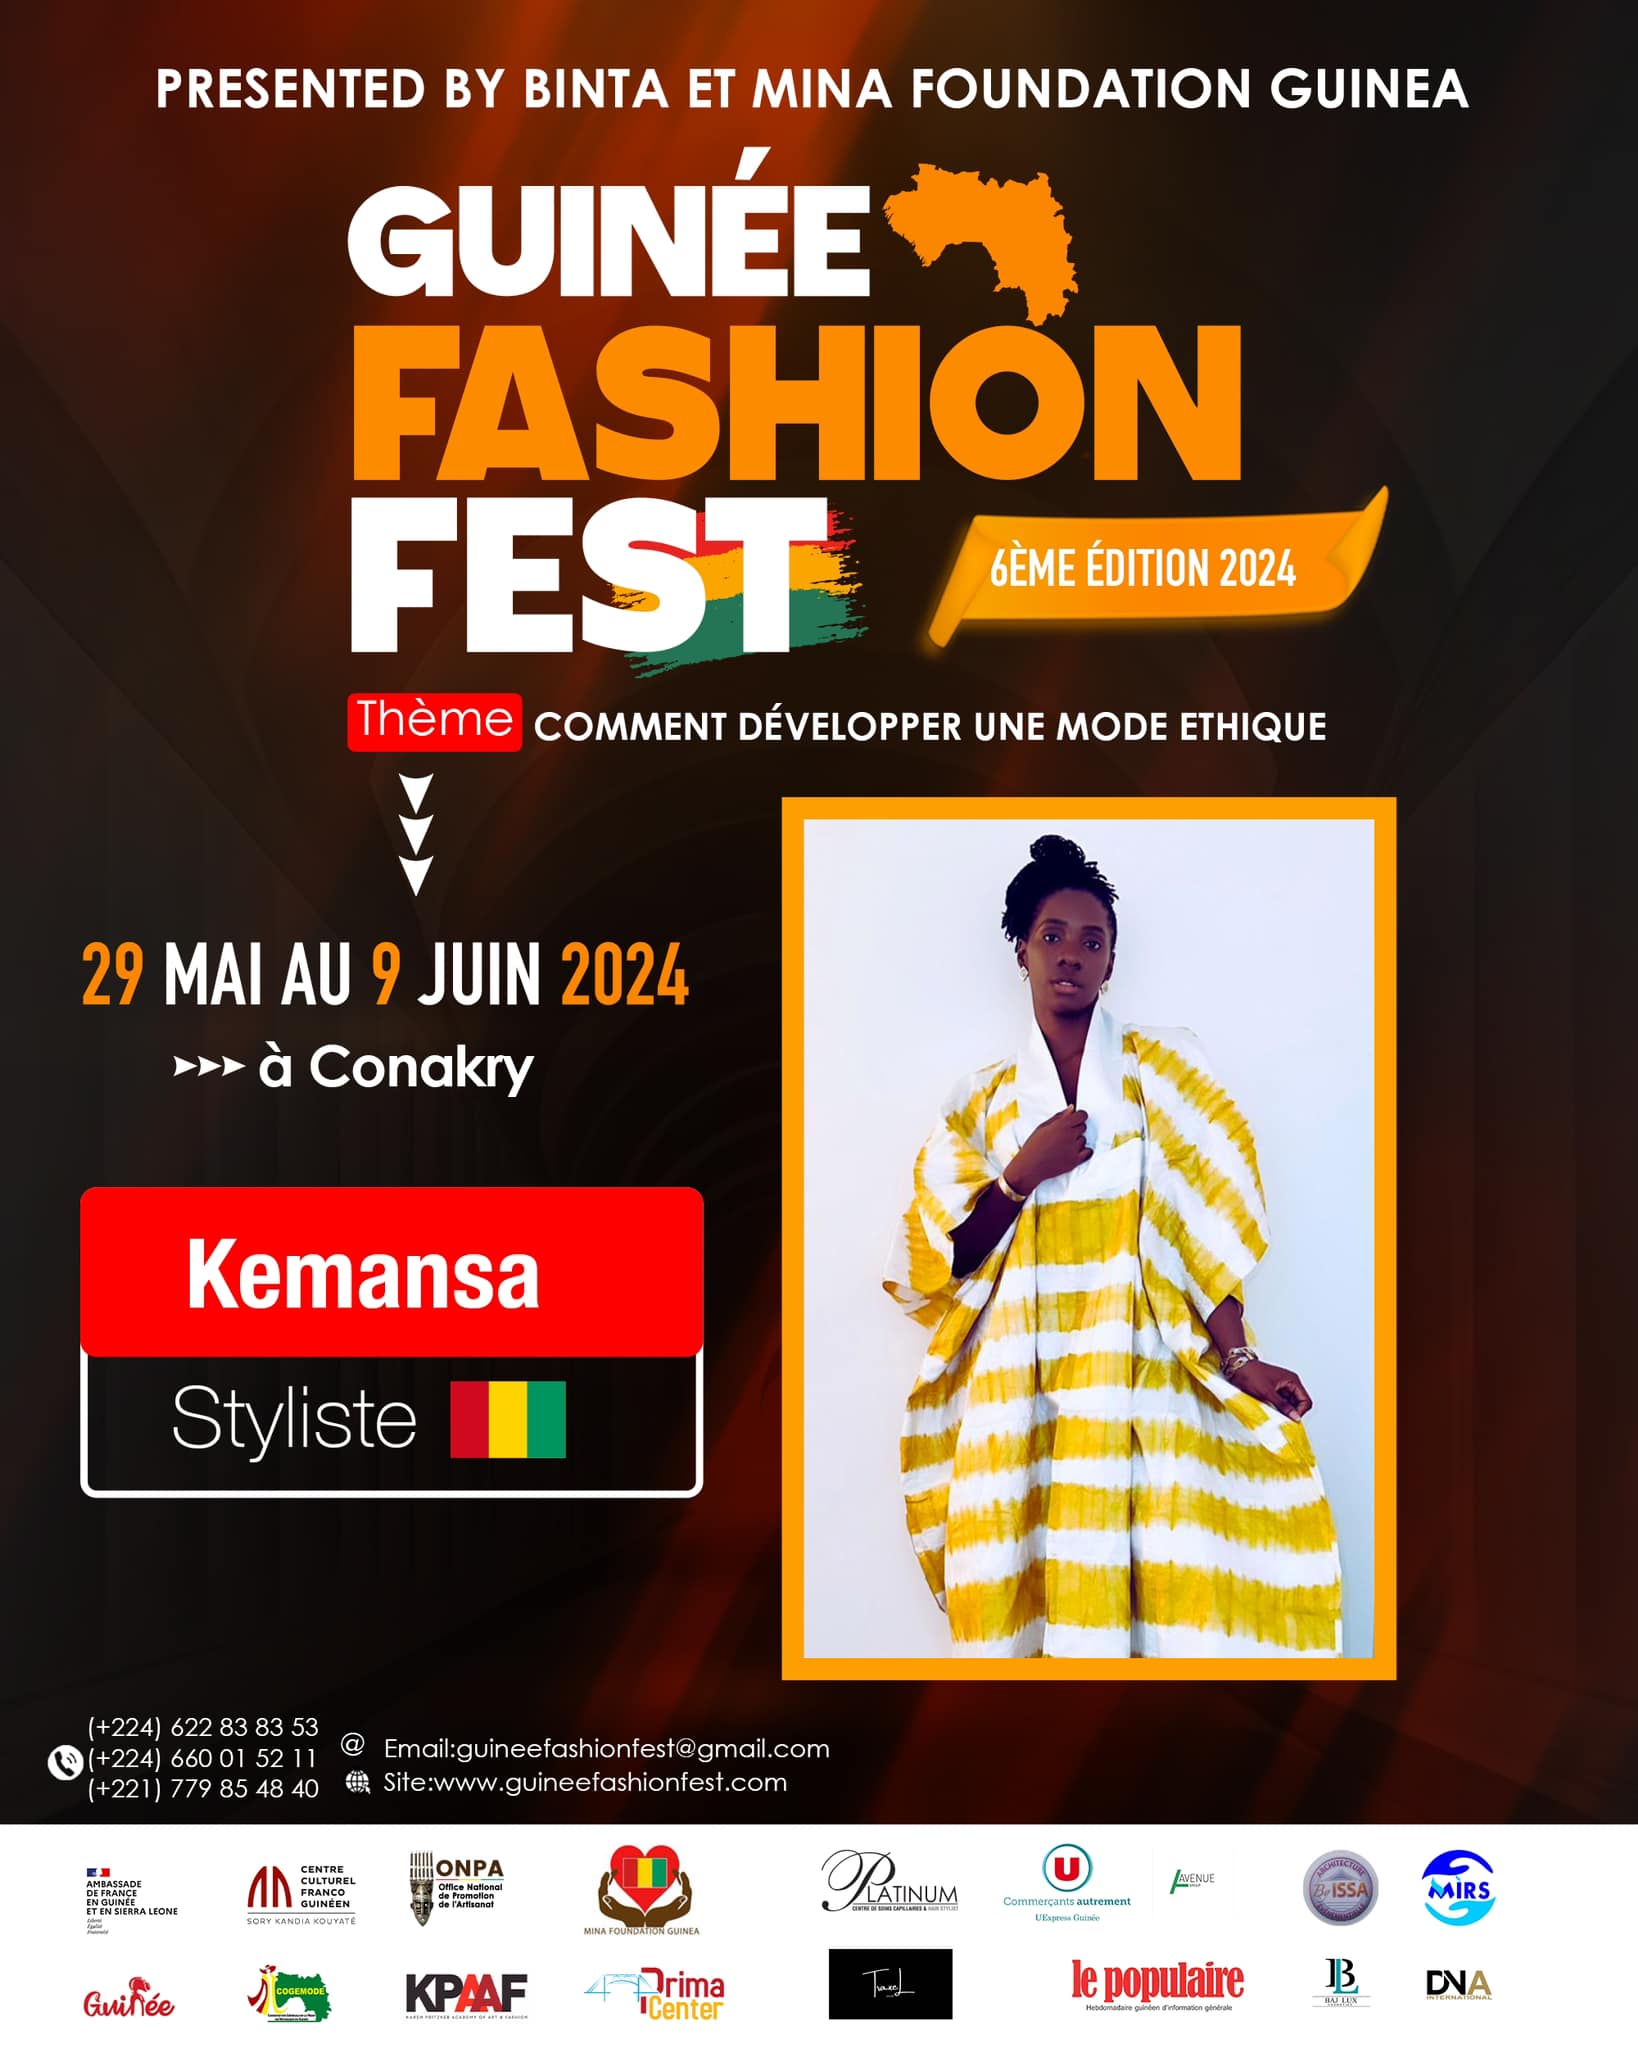 Guinée Fashion Fest presents Mabinty Dramé,